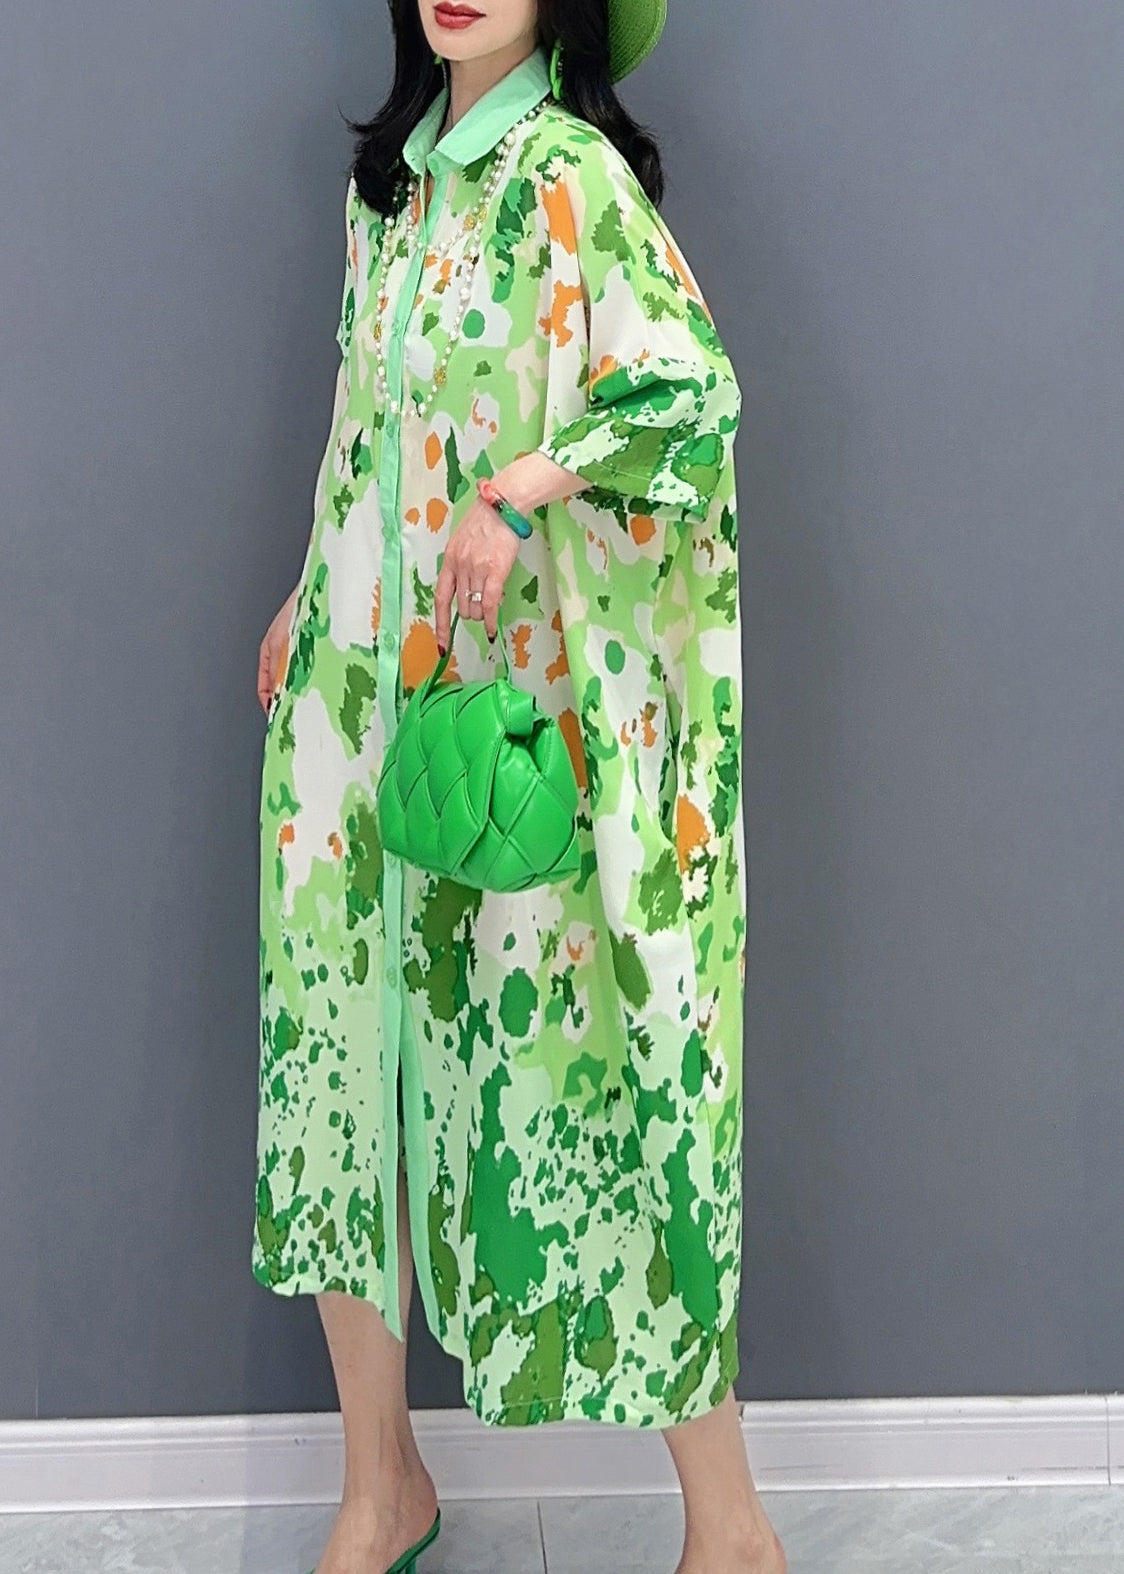 Boutique Green Print Button Party Long Shirts Dress Sunmer LC0304 - fabuloryshop